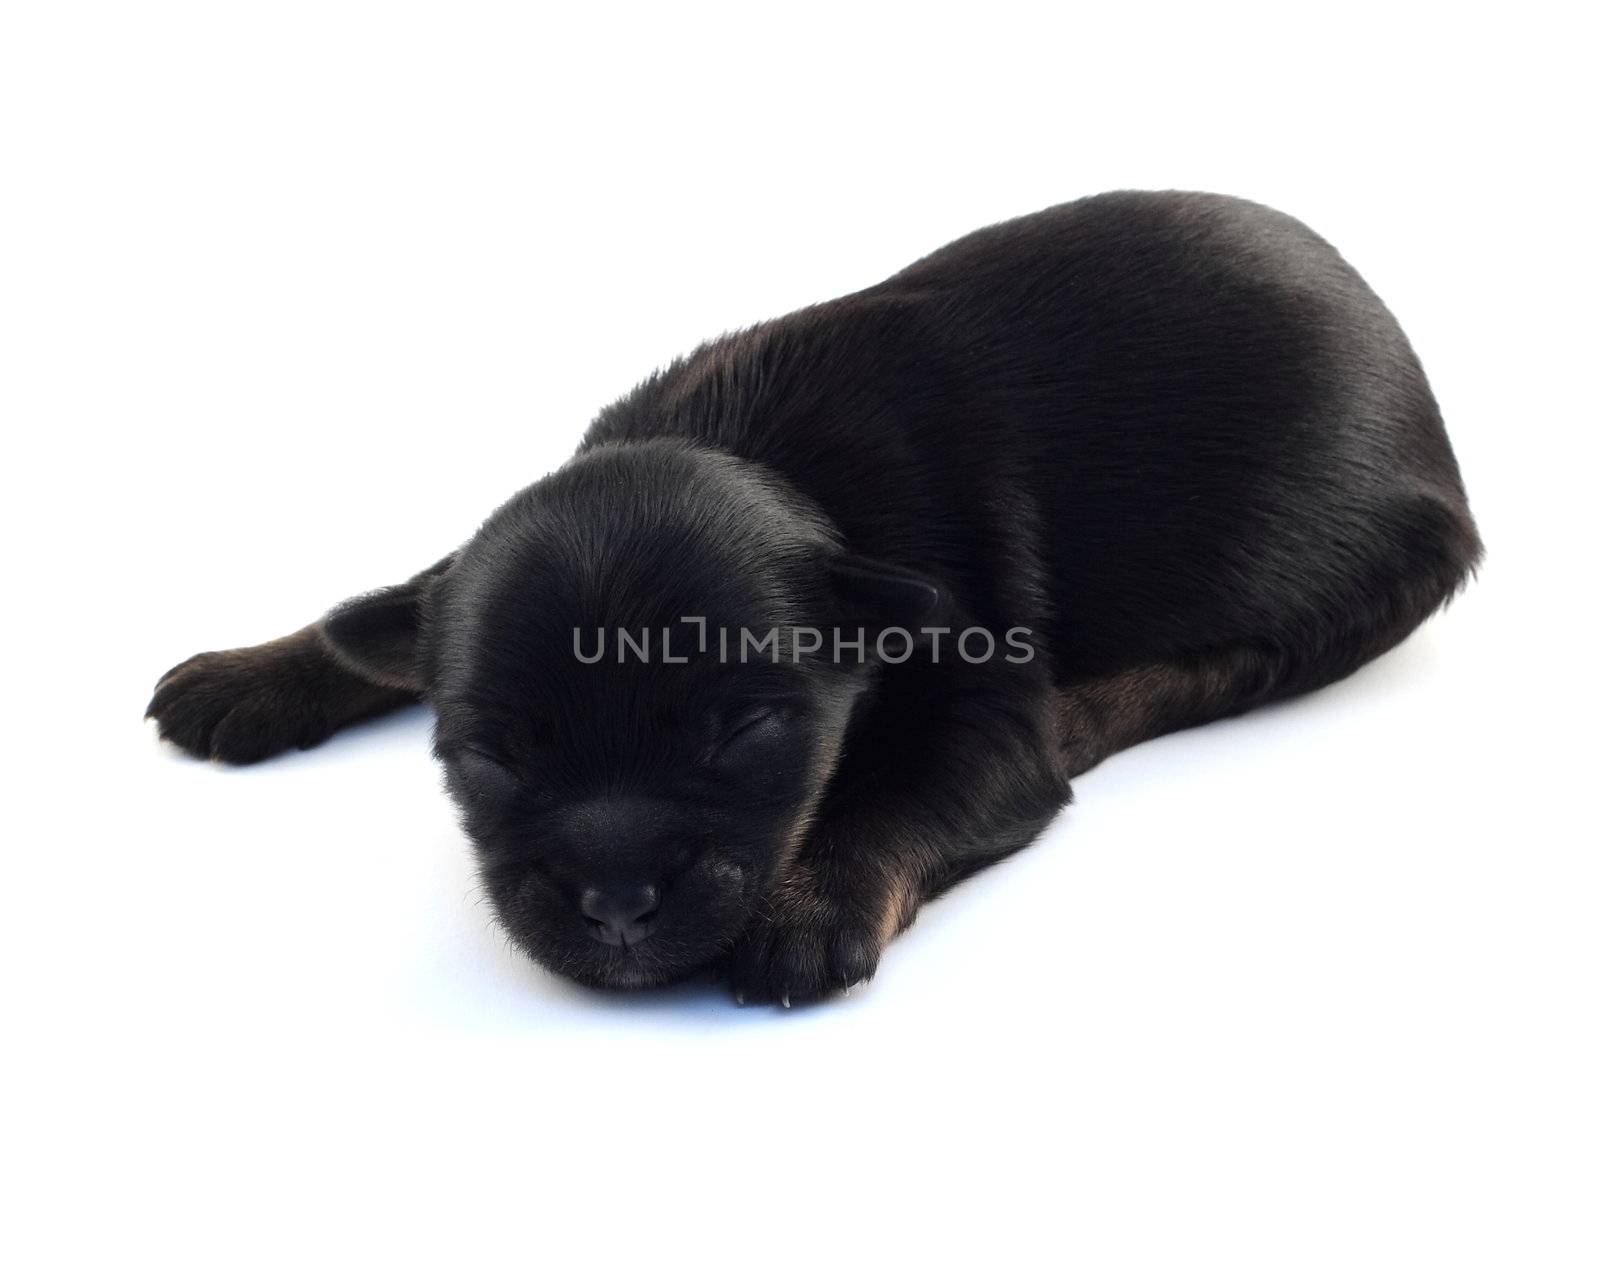 one newborn black and tan puppy, over white